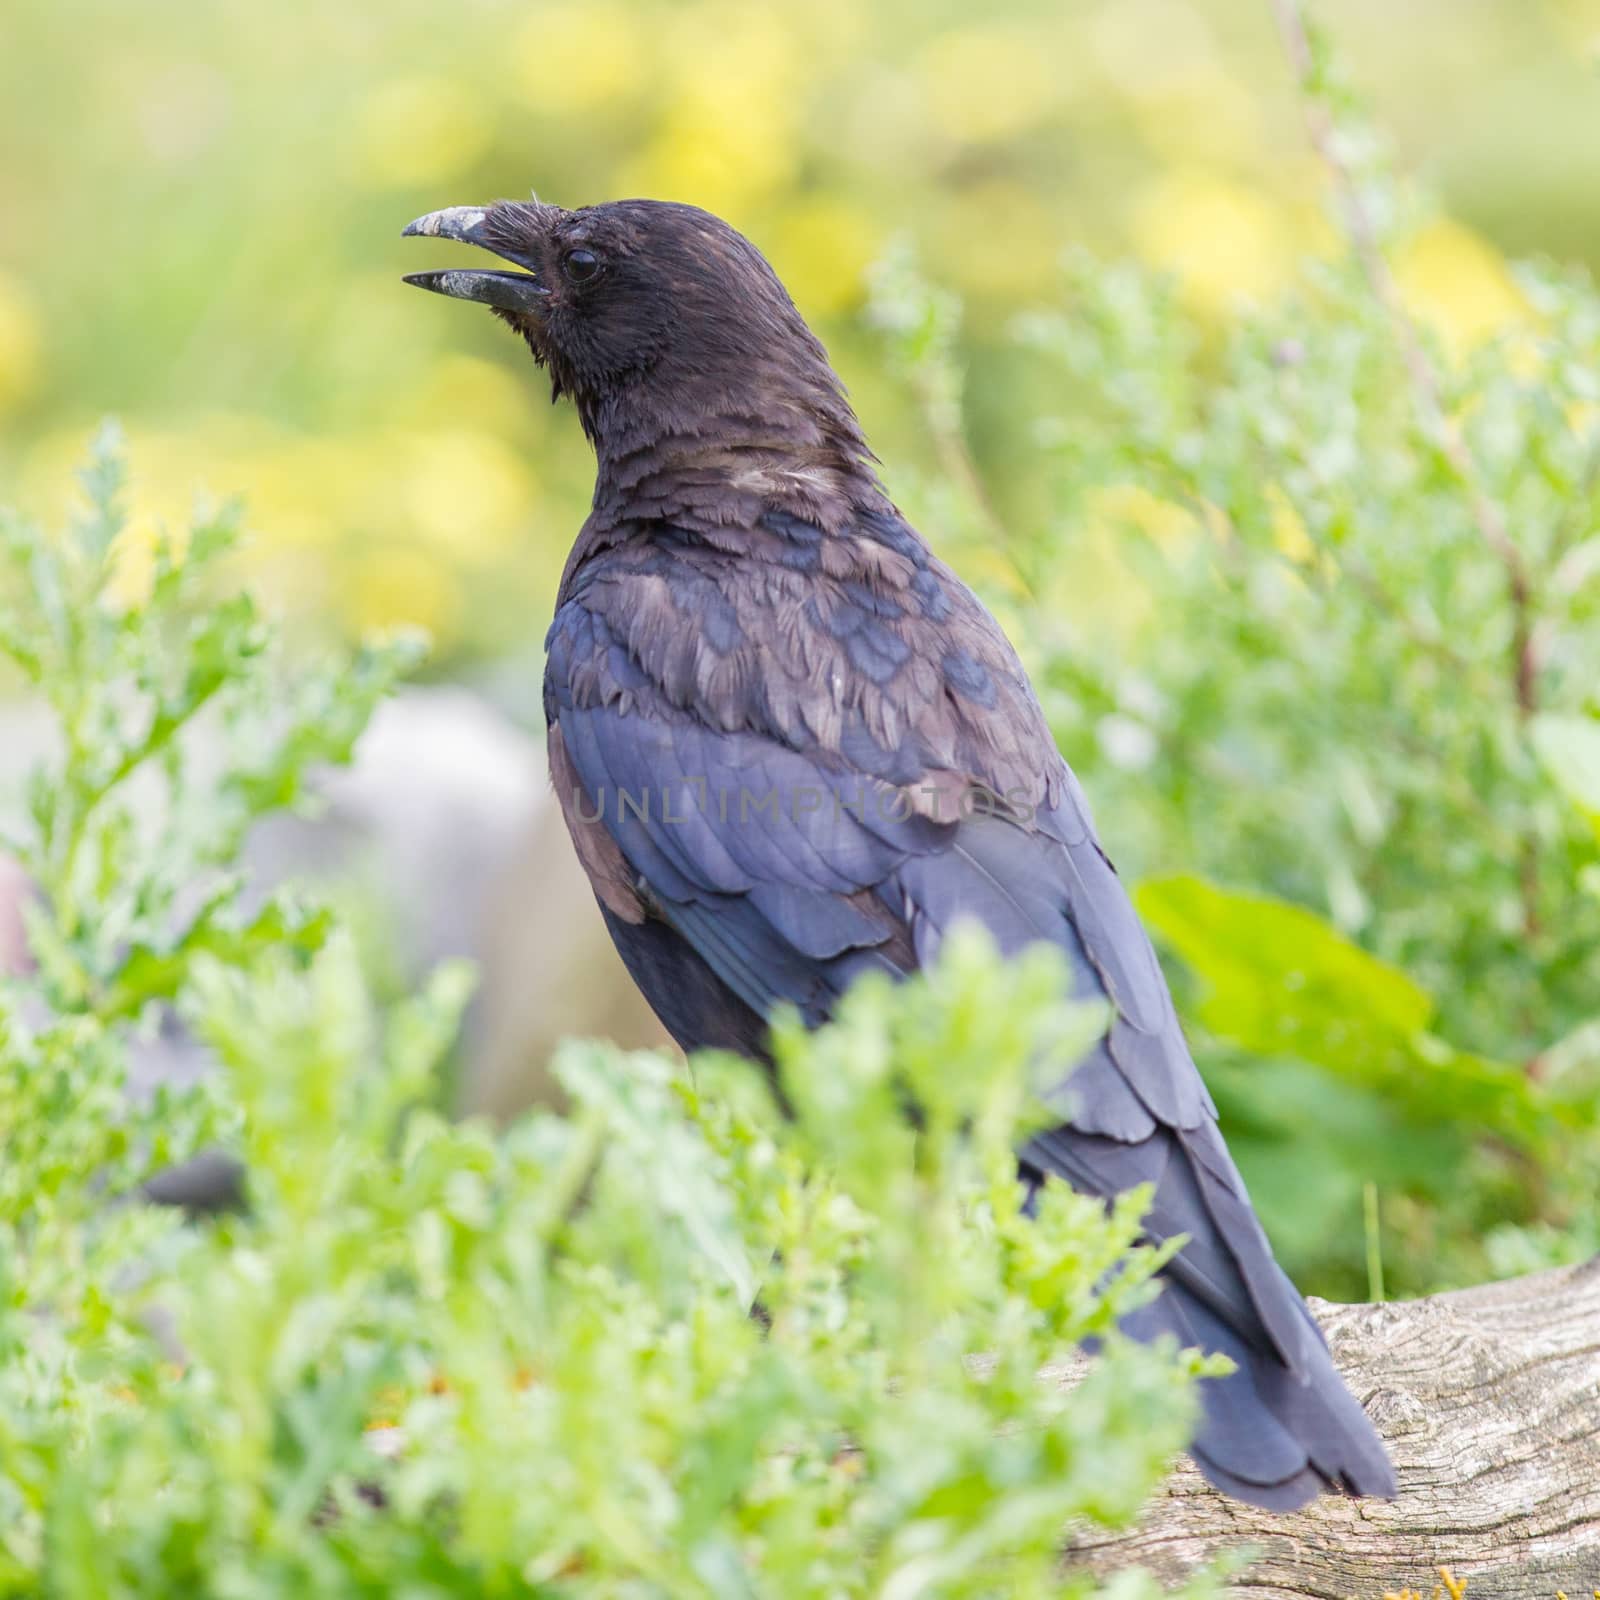 Black Crow by michaklootwijk